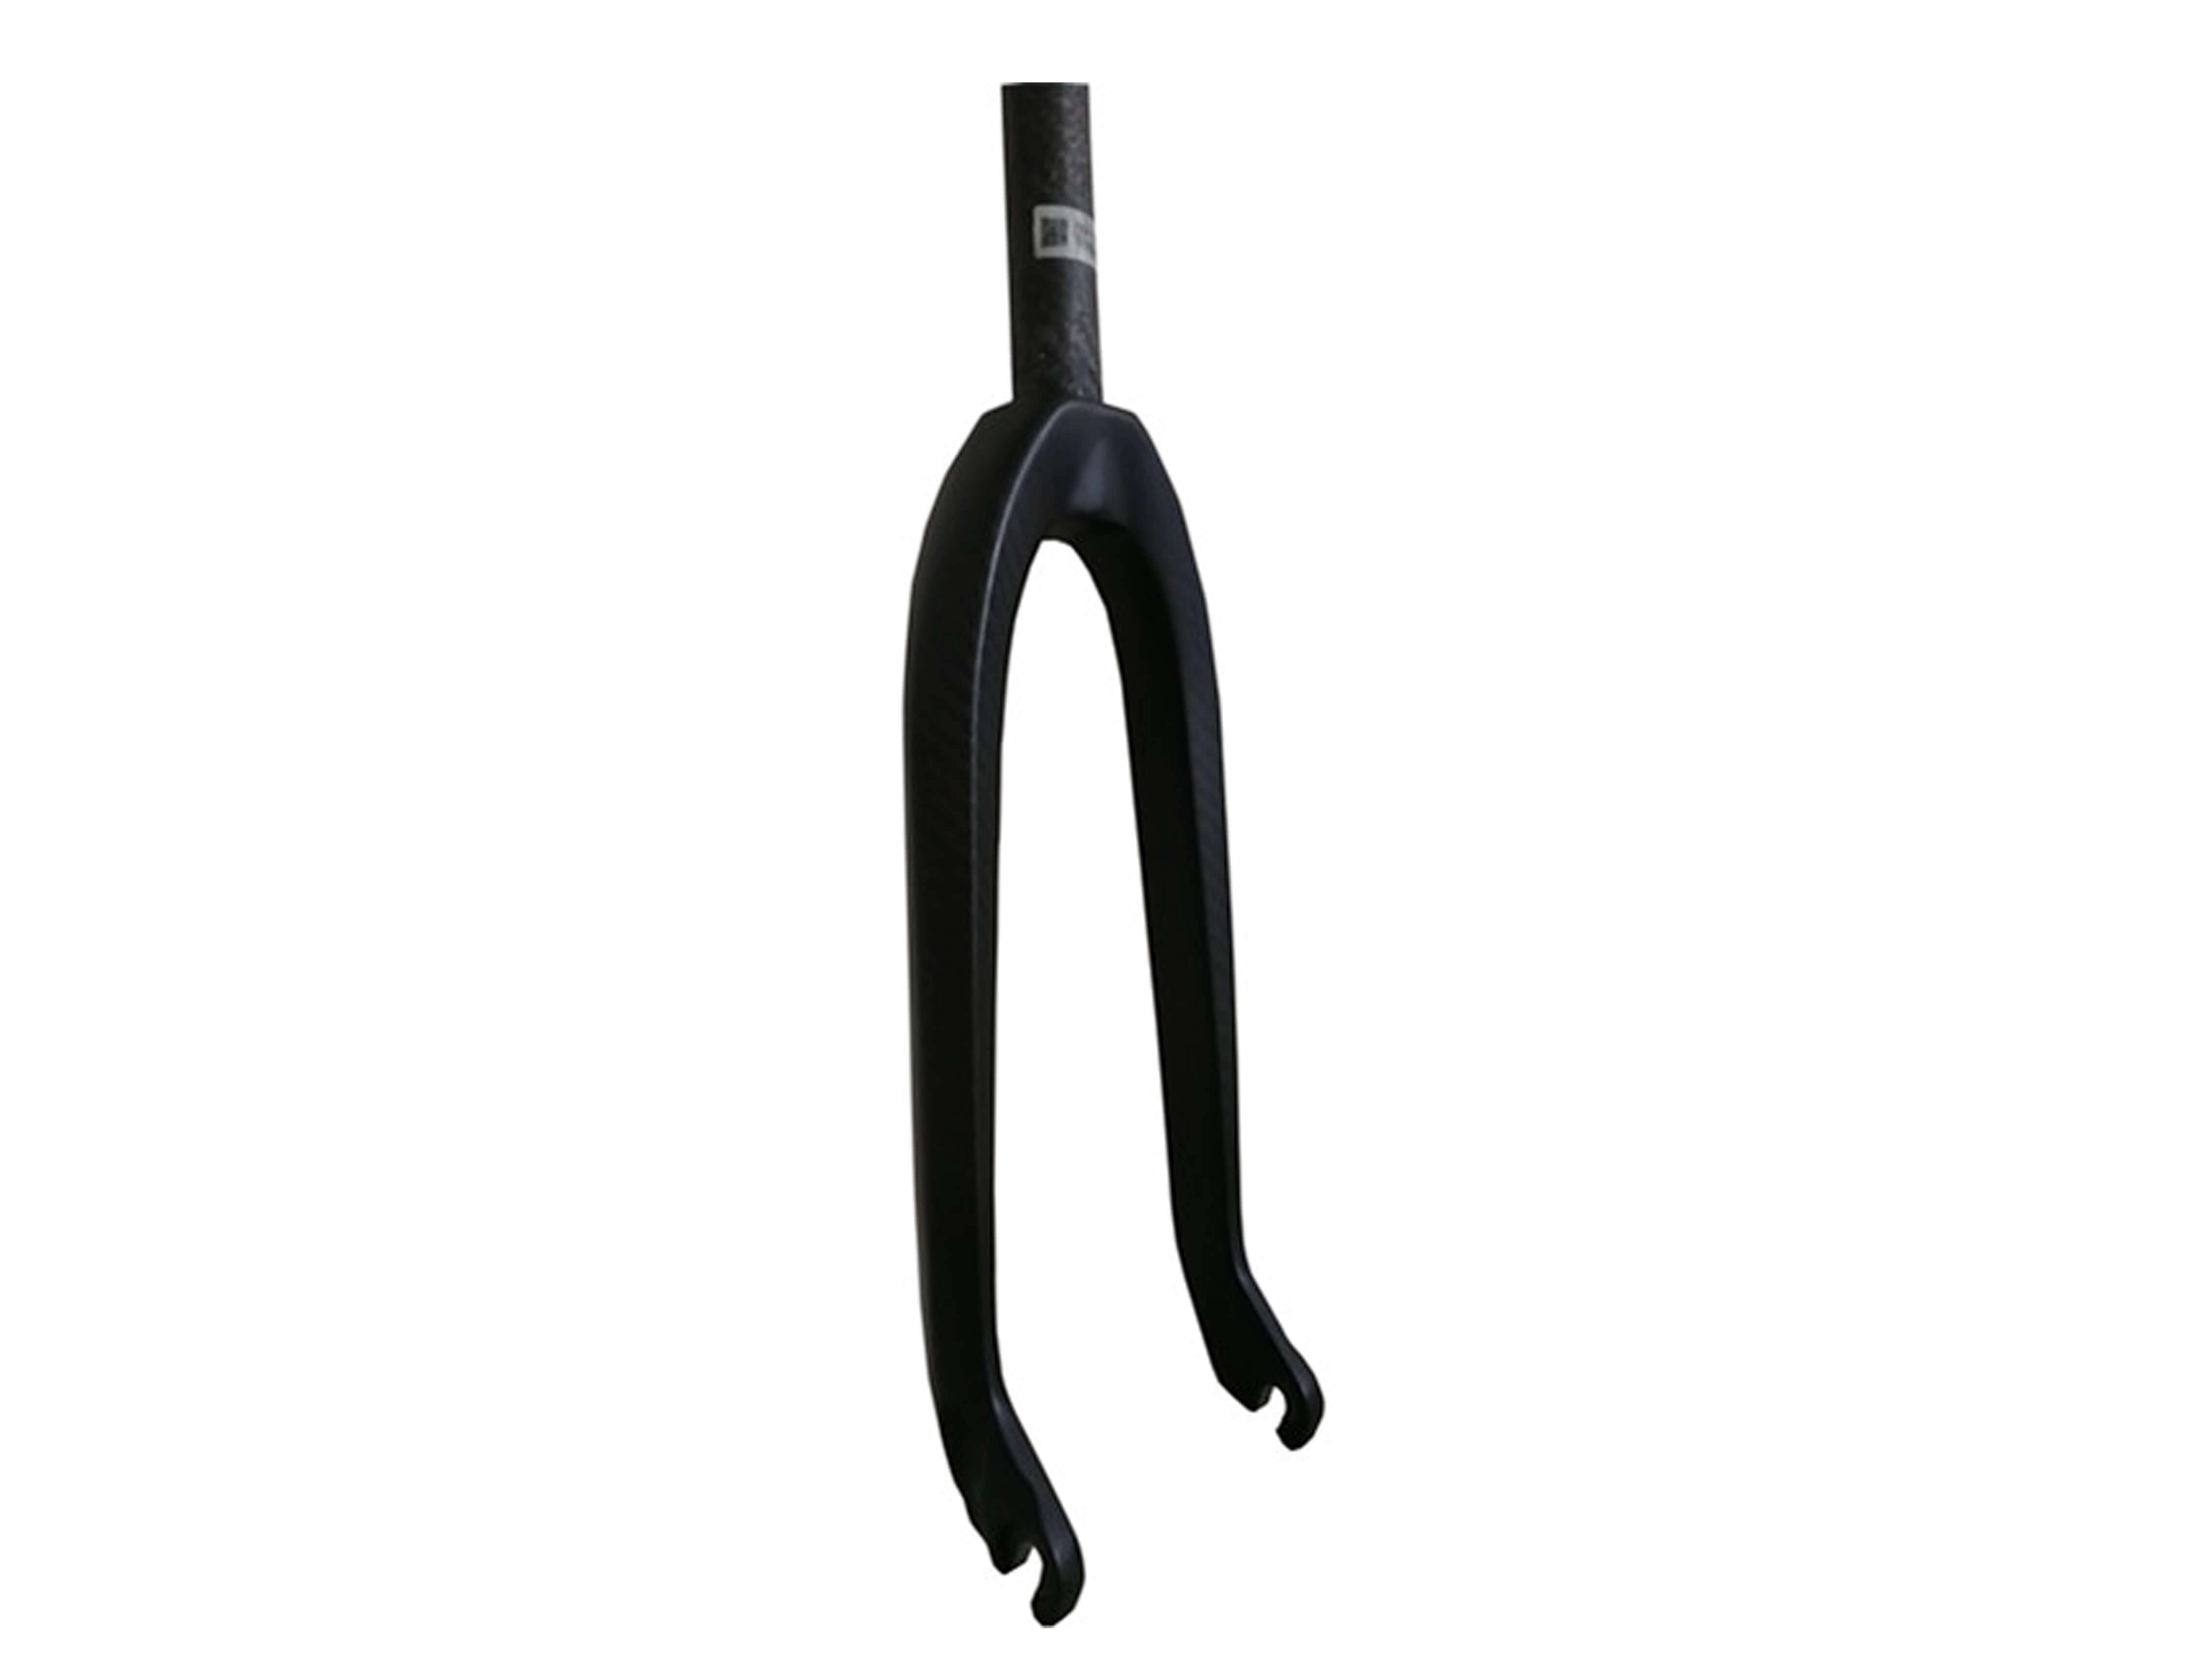 20 Inch Carbon Rigid Bmx Fork With QR Design